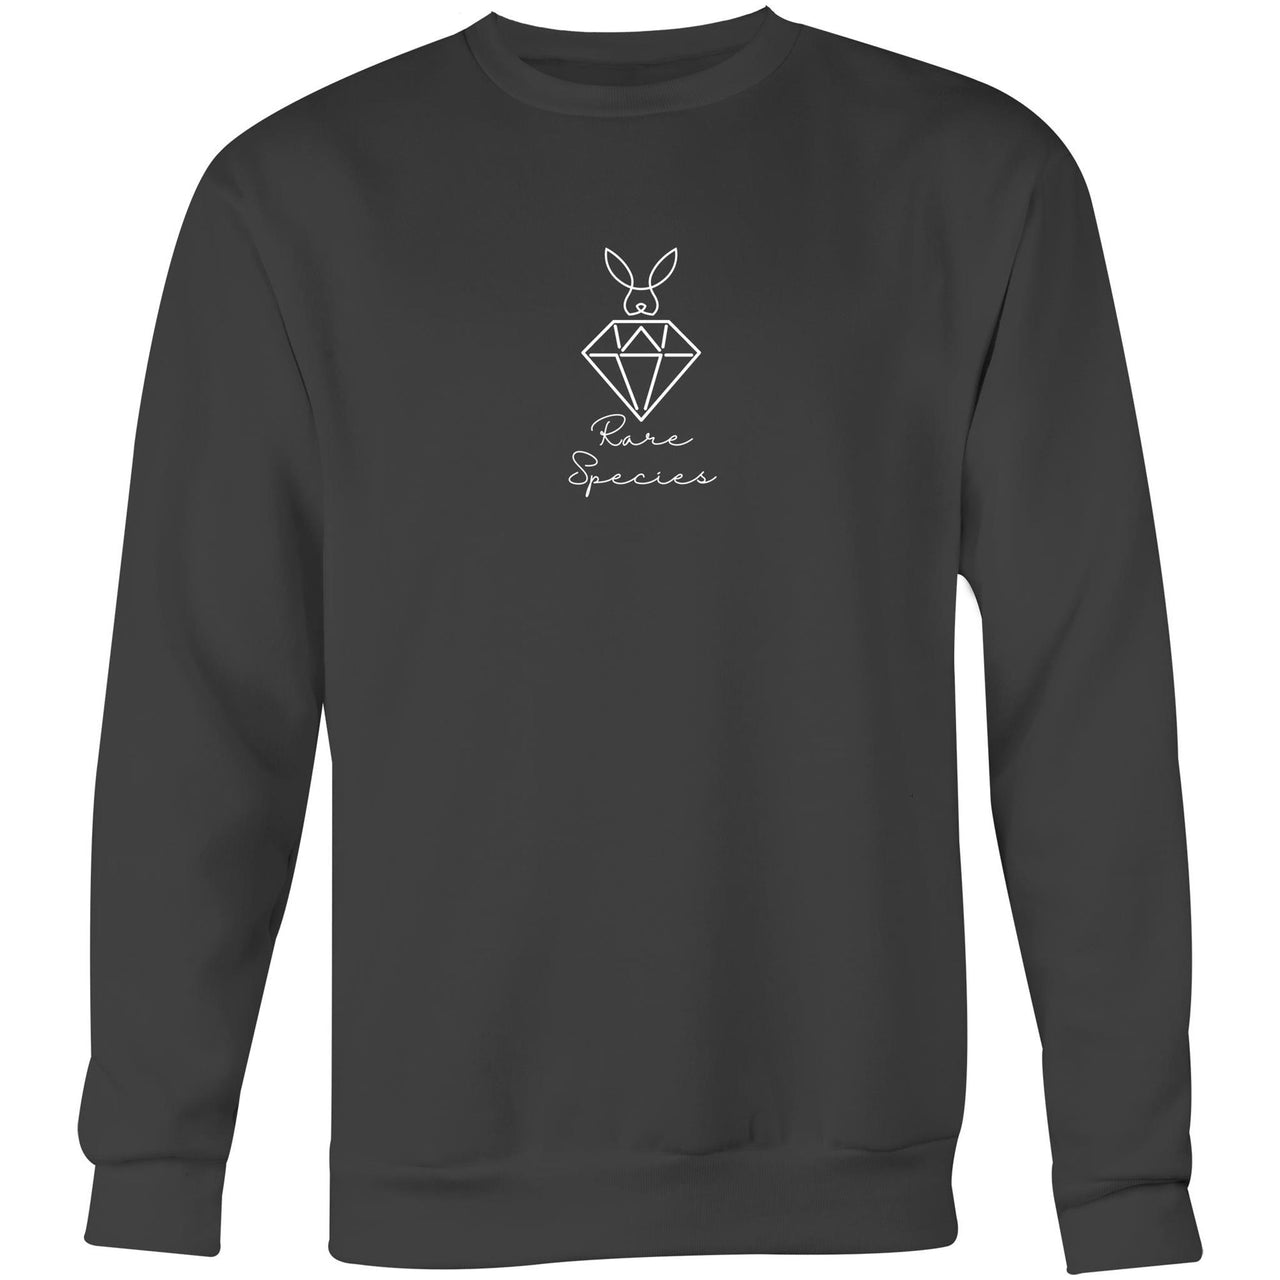 CBF Rare Species Crew Sweatshirt charcoal by CBF Clothing